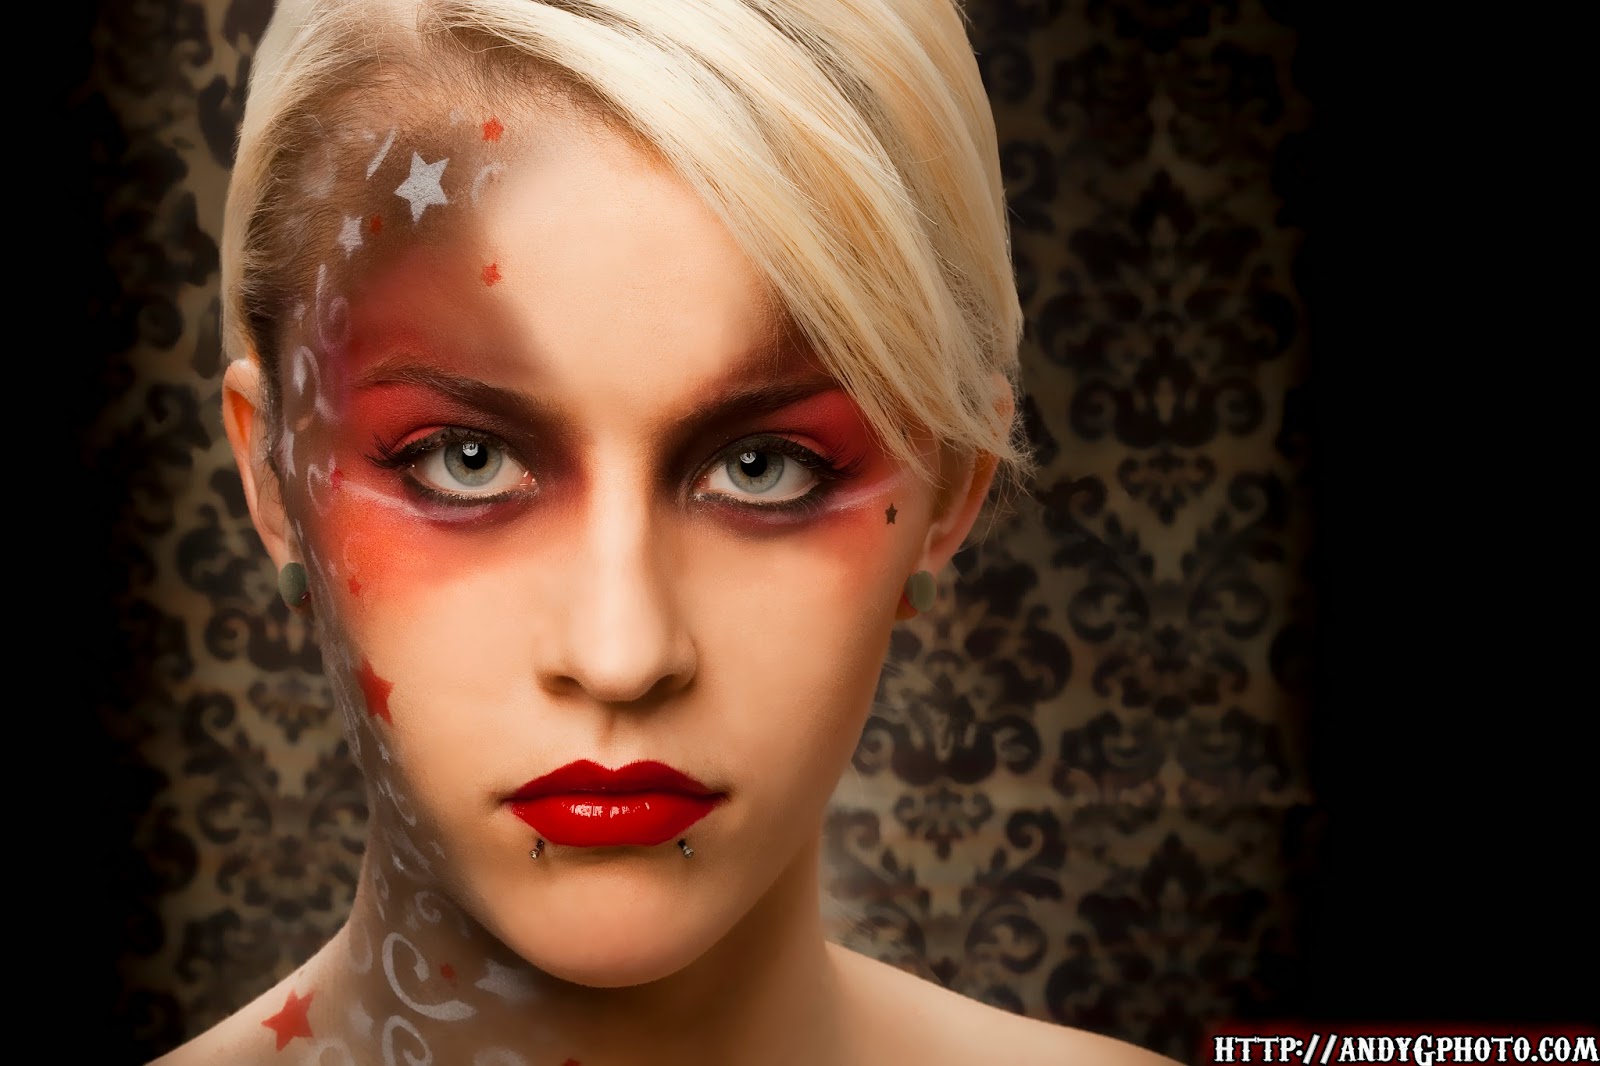 Dolled Up OC: Fun Fantasy circus style airbrush makeup